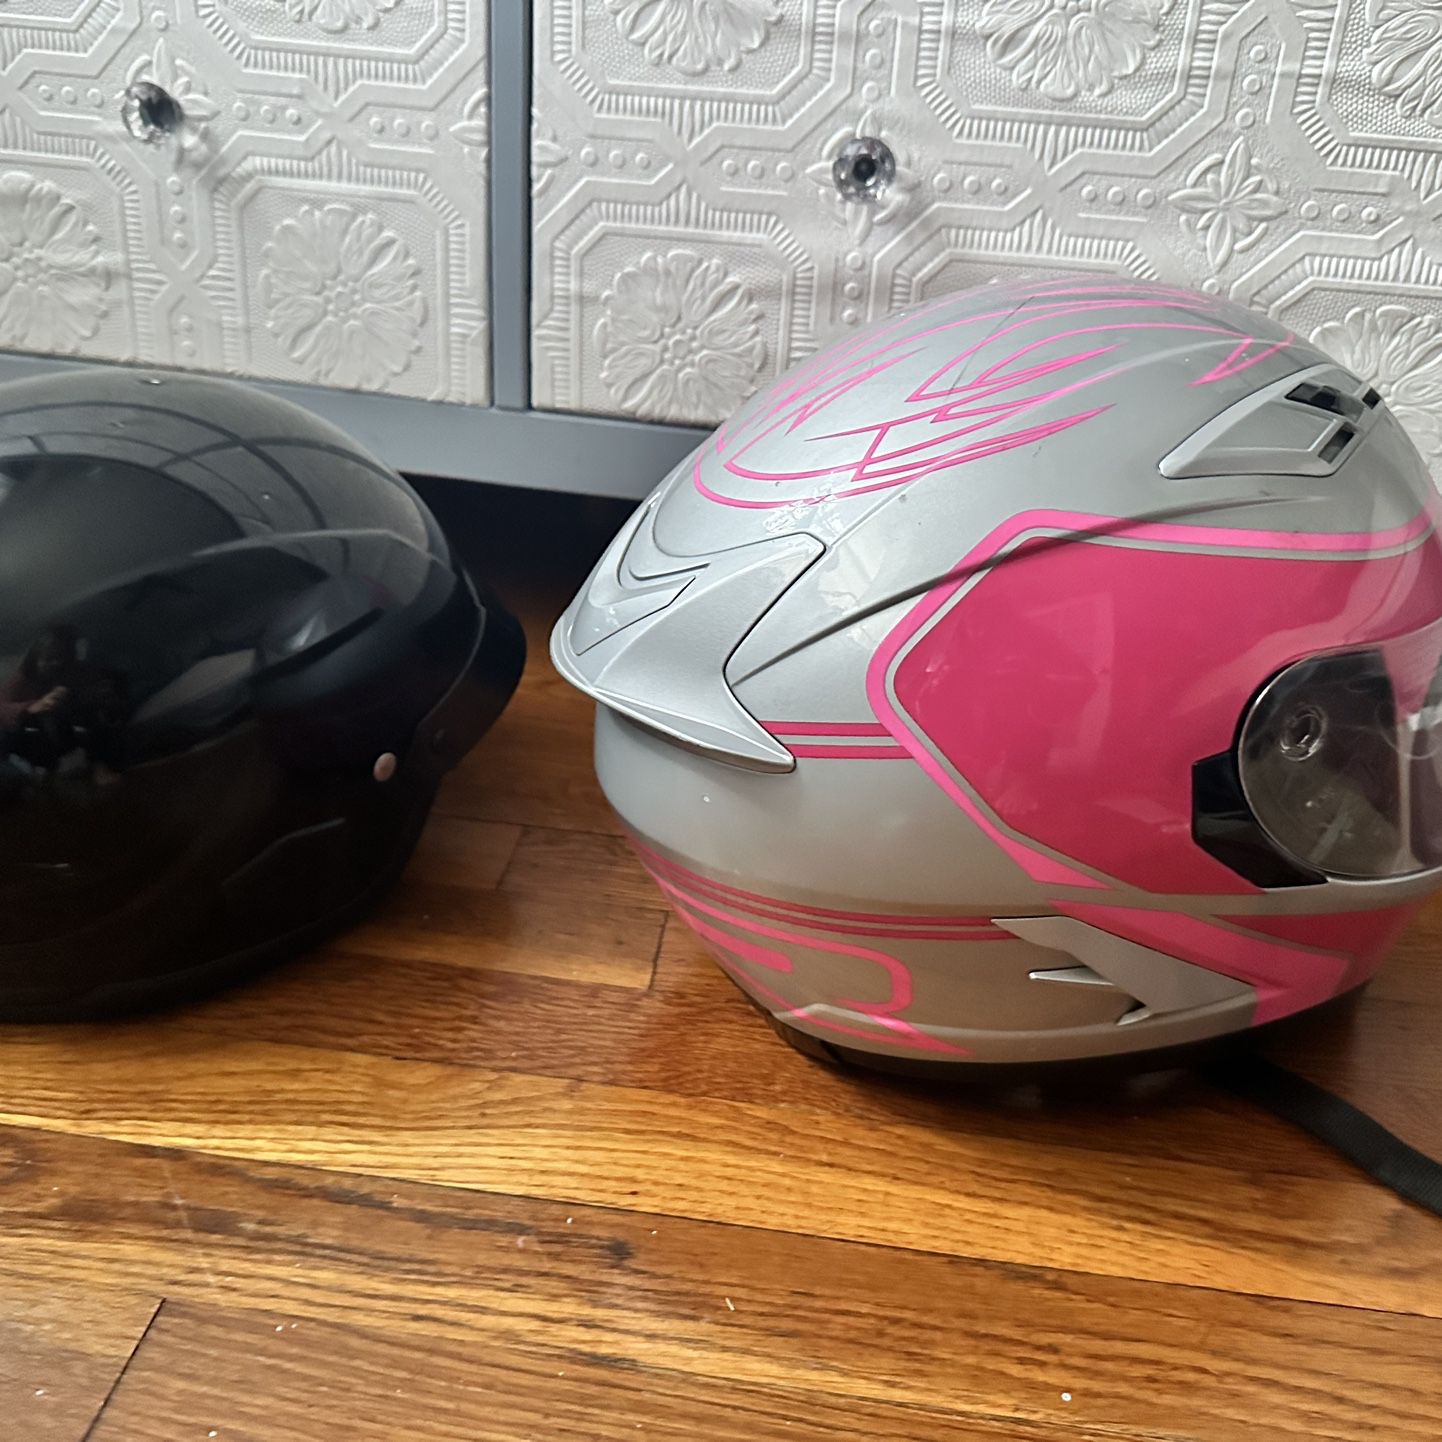 Two Motorcycle Helmets   